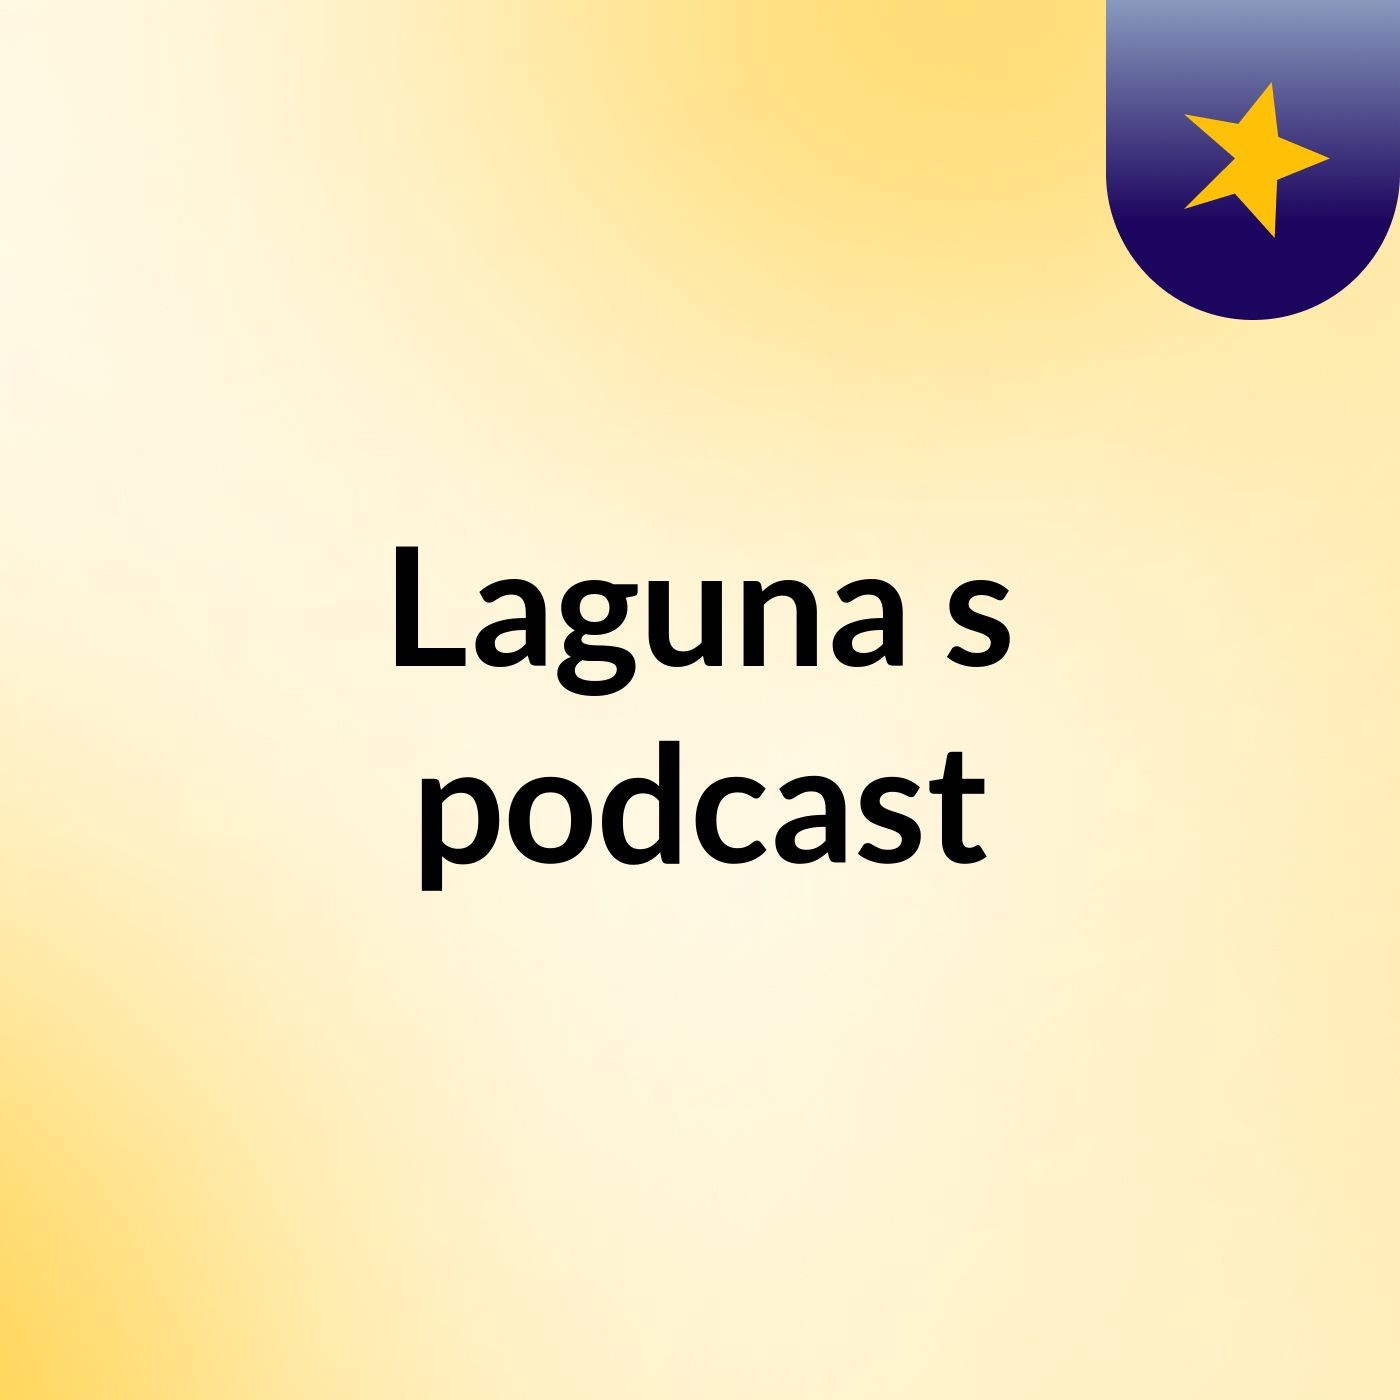 Episode 3 - Laguna's podcast